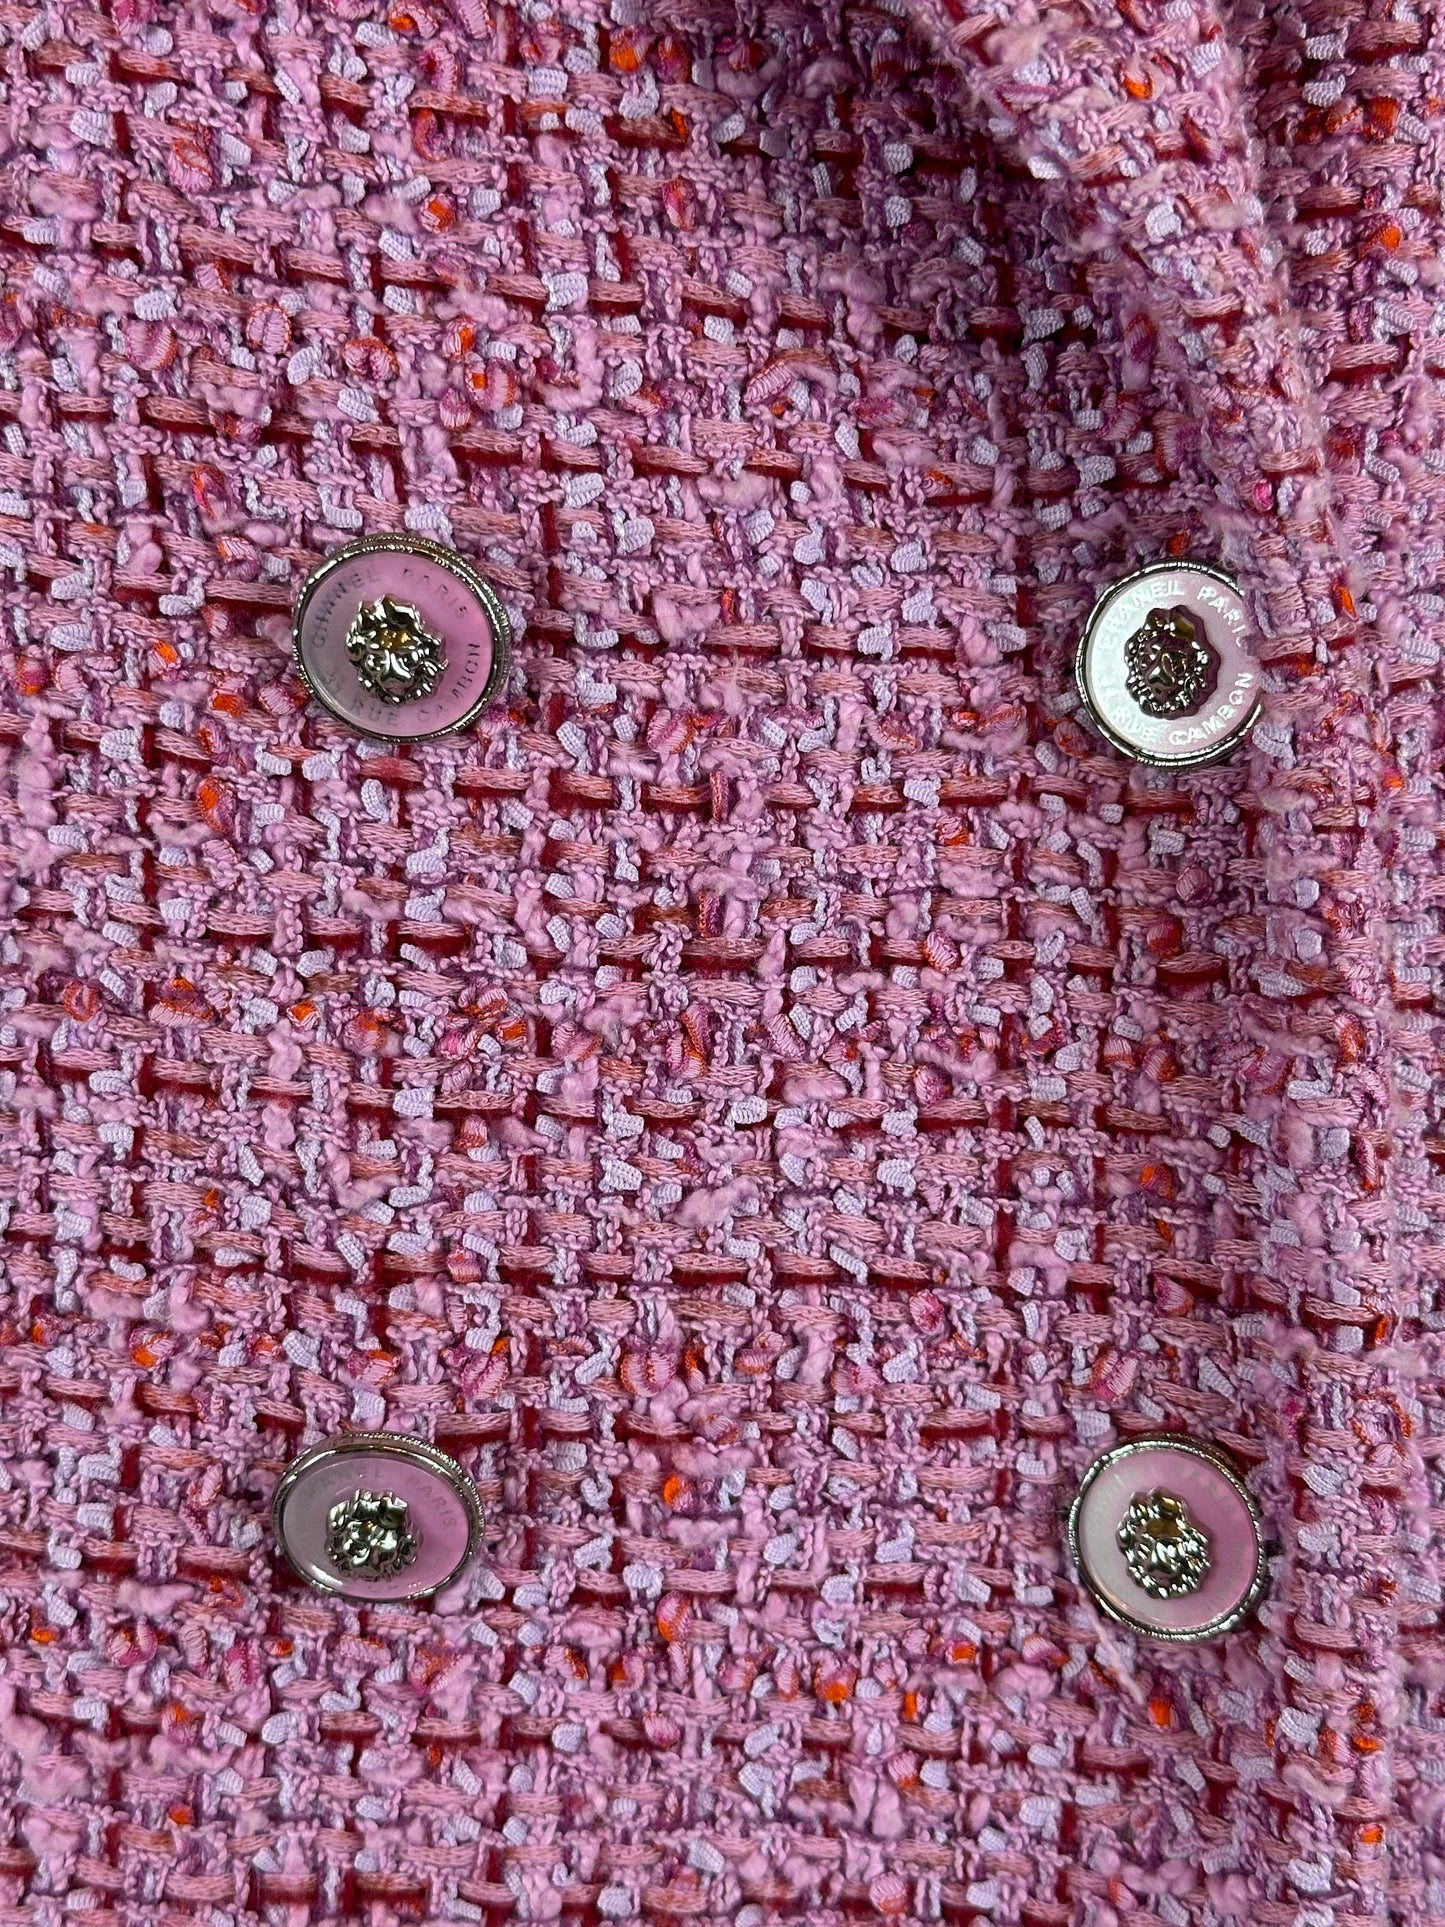 CHANEL - Oversize Coat tweed pink size 38 FR